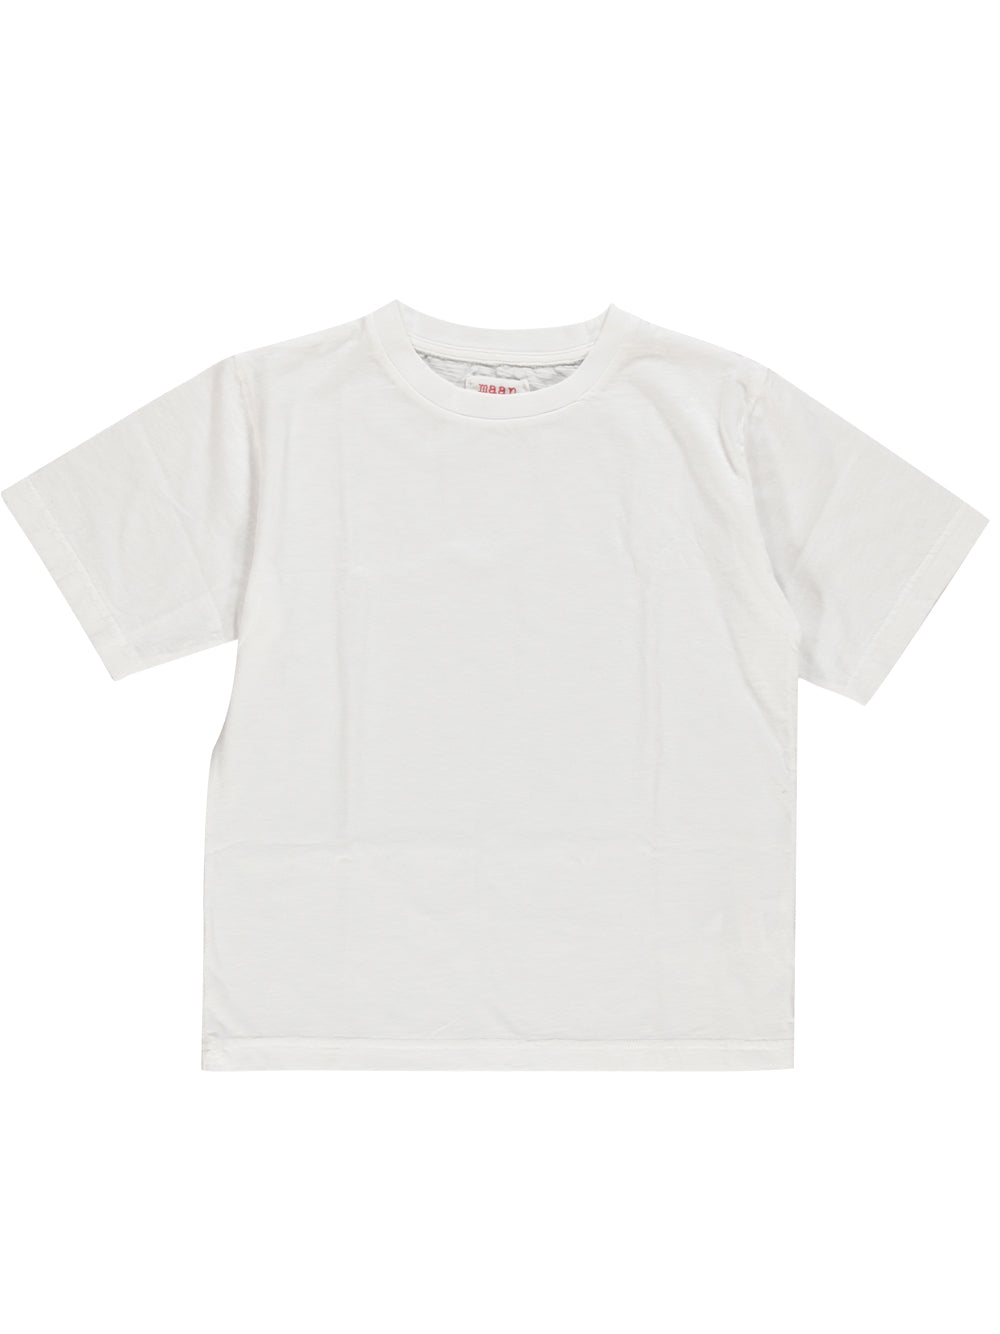 PREORDER: Martin White T-Shirt